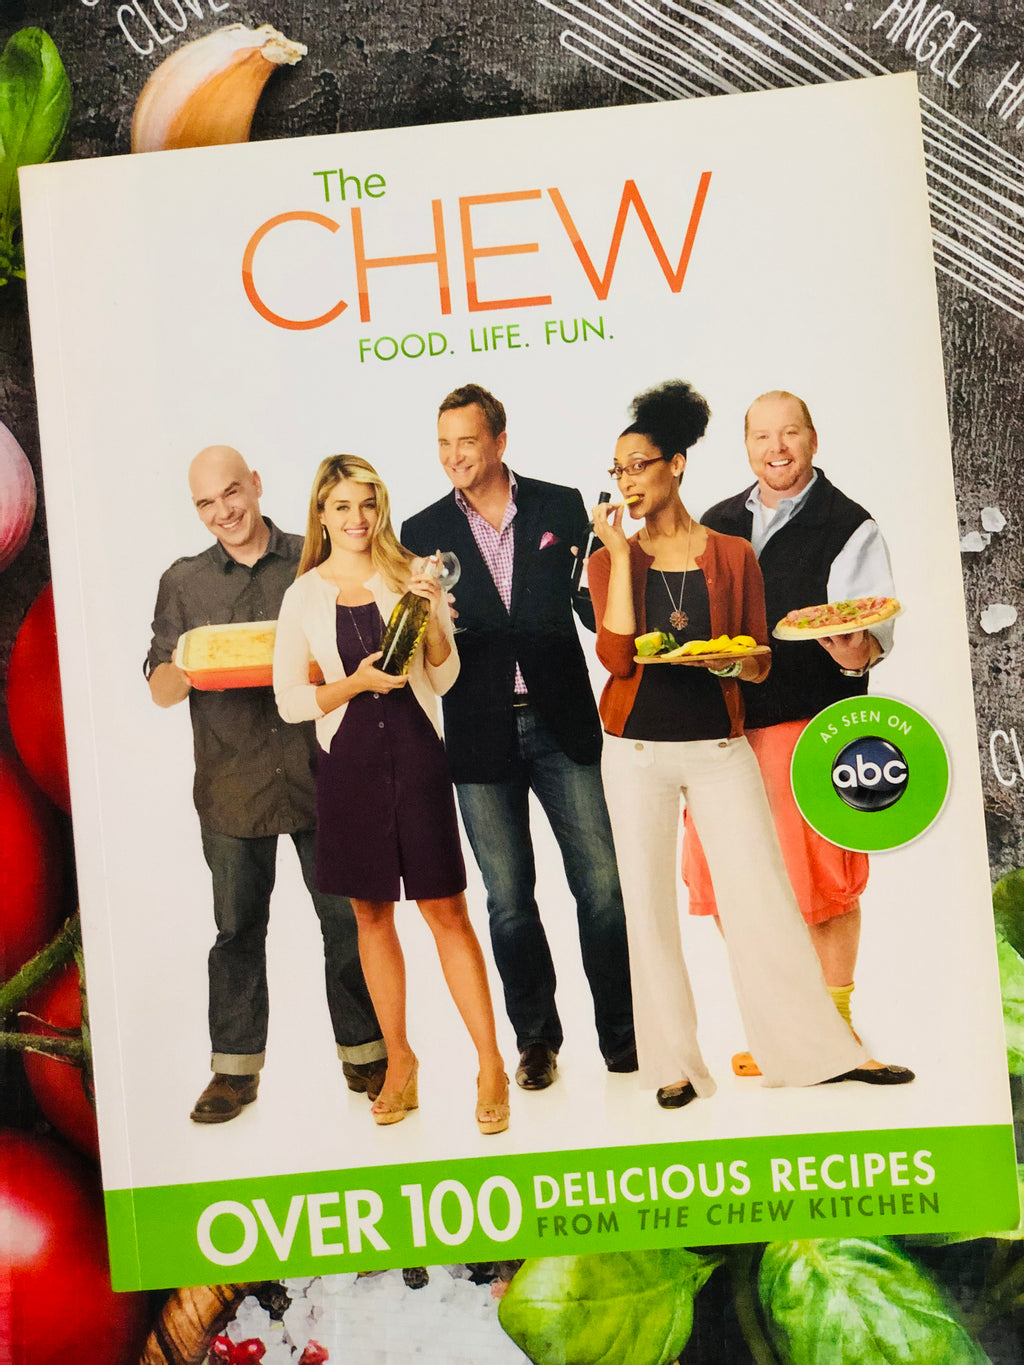 The Chew: Food. Life. Fun- By Mario Batali, Gordon Elliot and More!